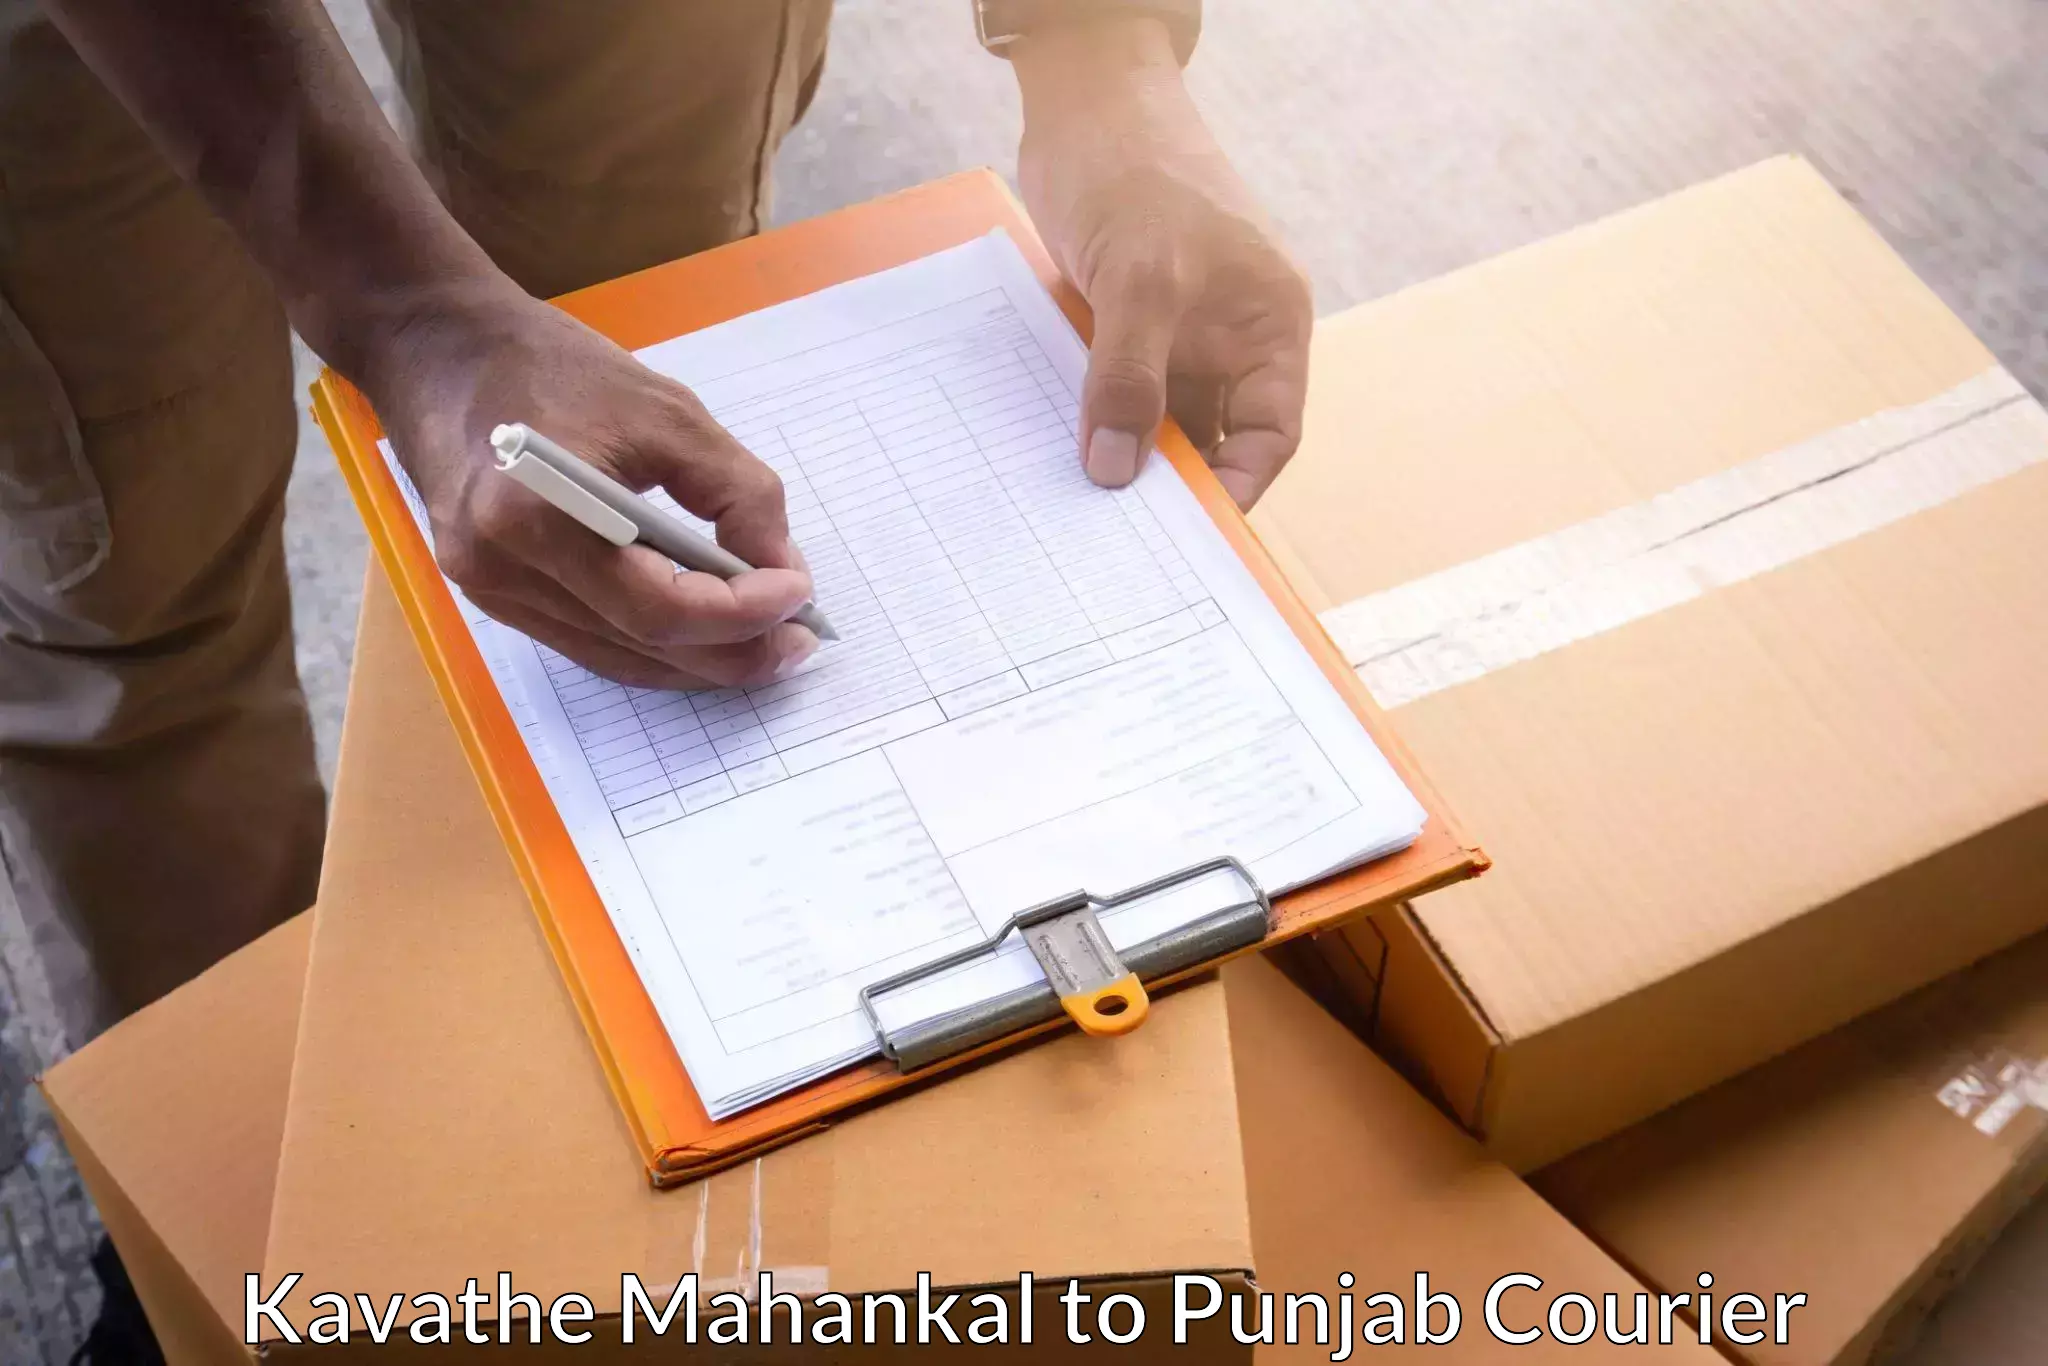 Affordable international shipping Kavathe Mahankal to Punjab